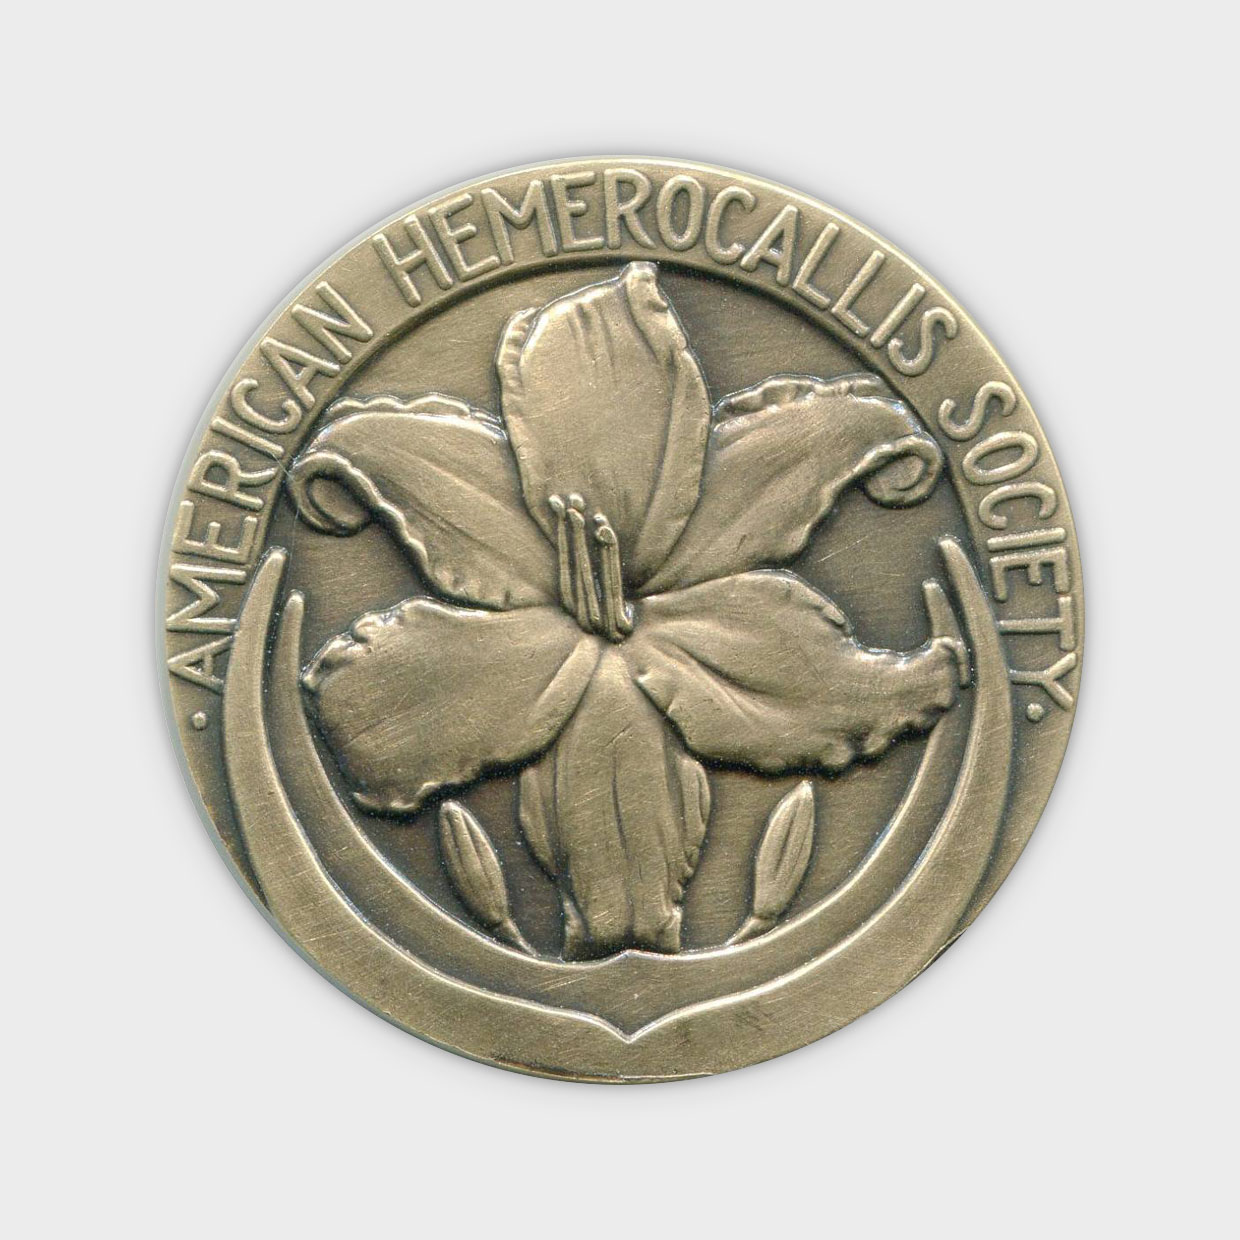 American Hemerocallis Society Coin Obverse